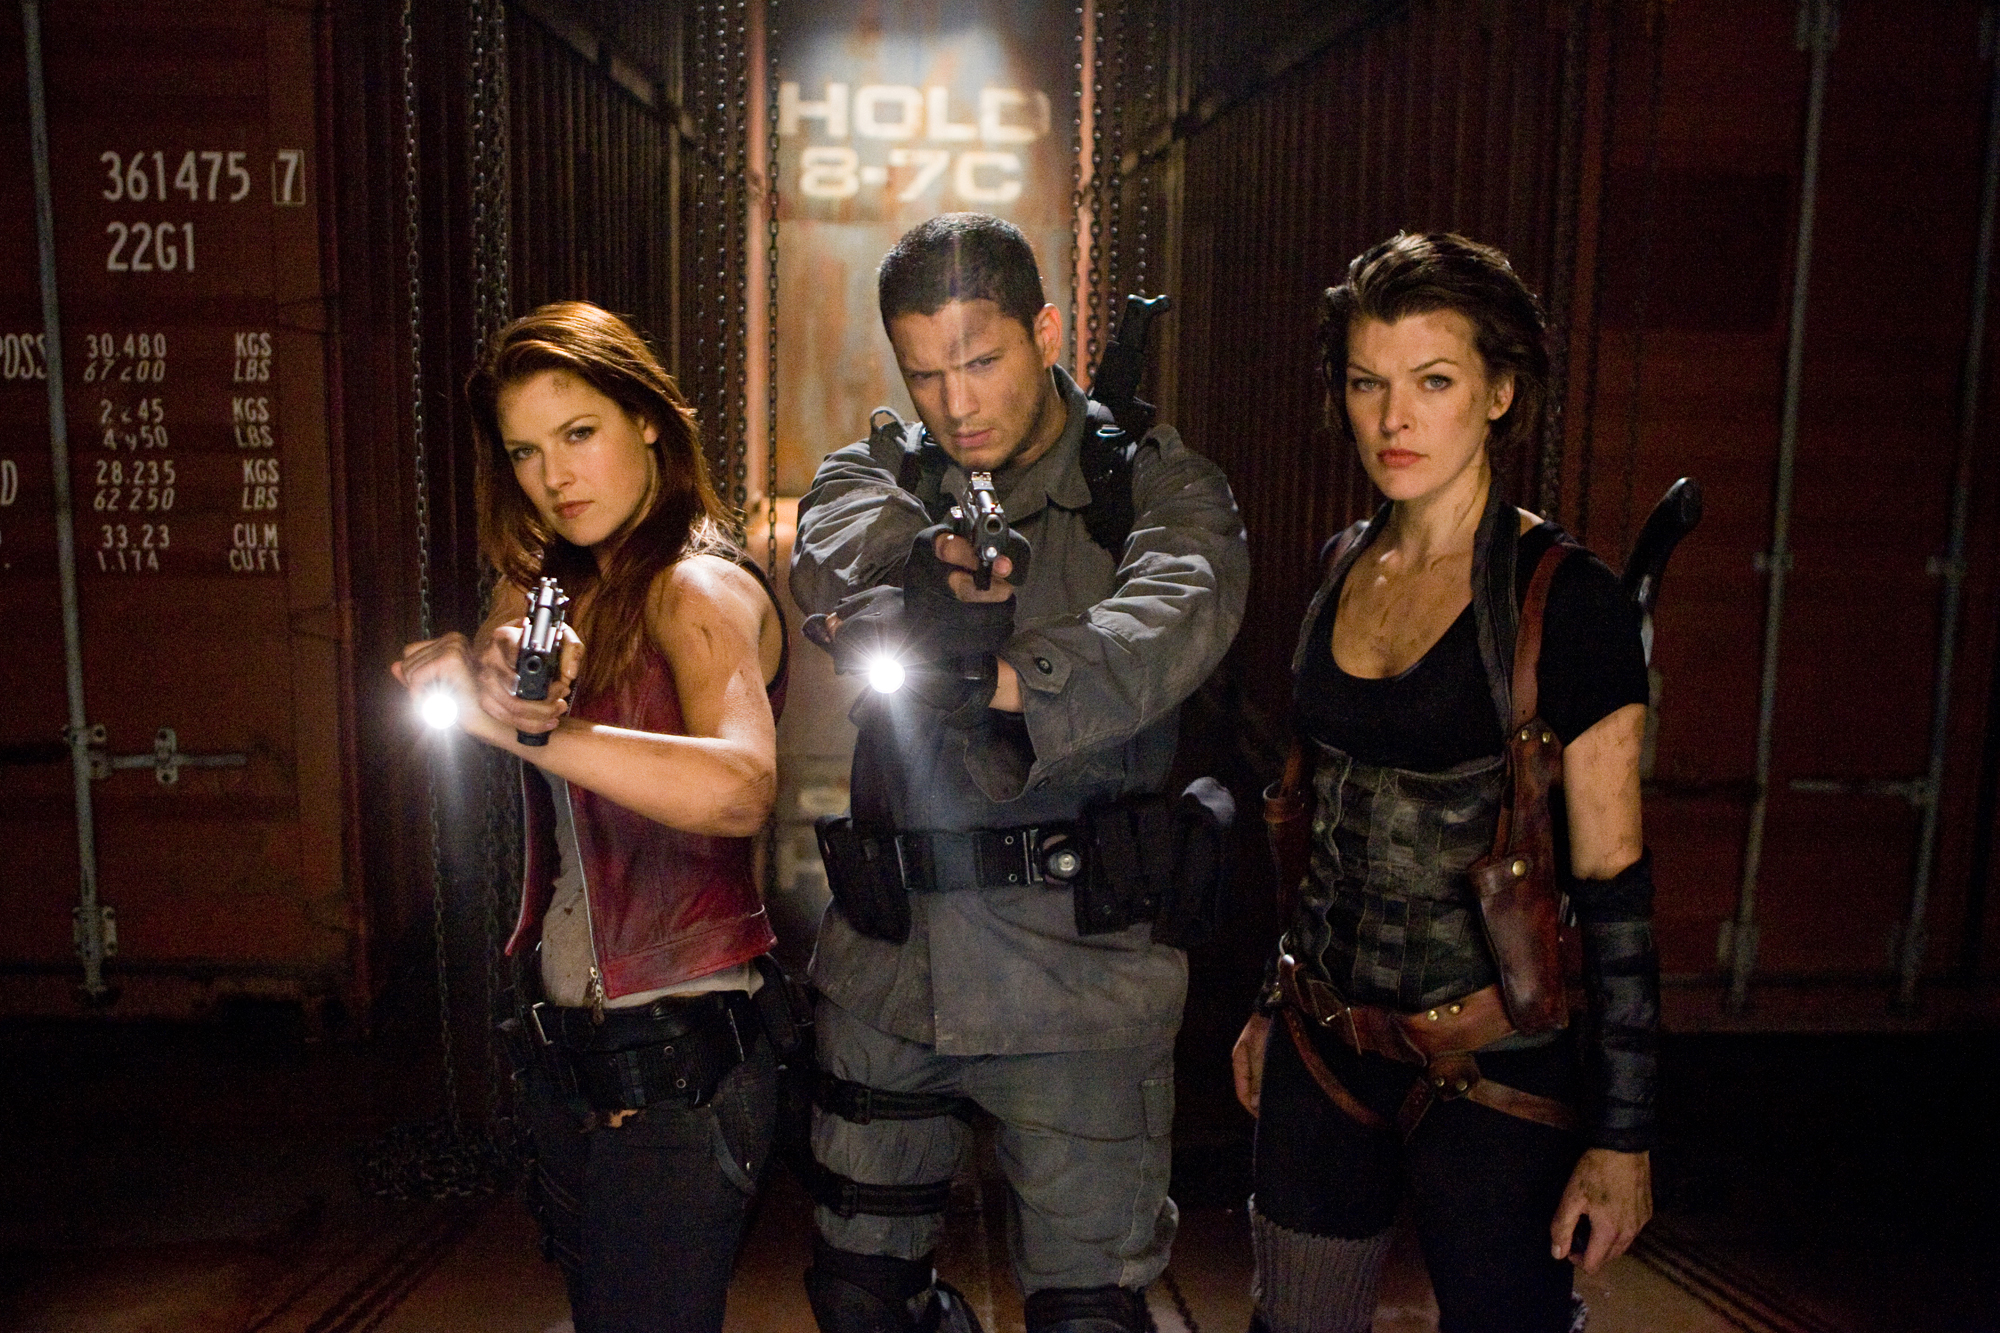 актрисы, Resident Evil, Али Лартер, Вентворт Миллер, Милла Йовович - обои на рабочий стол